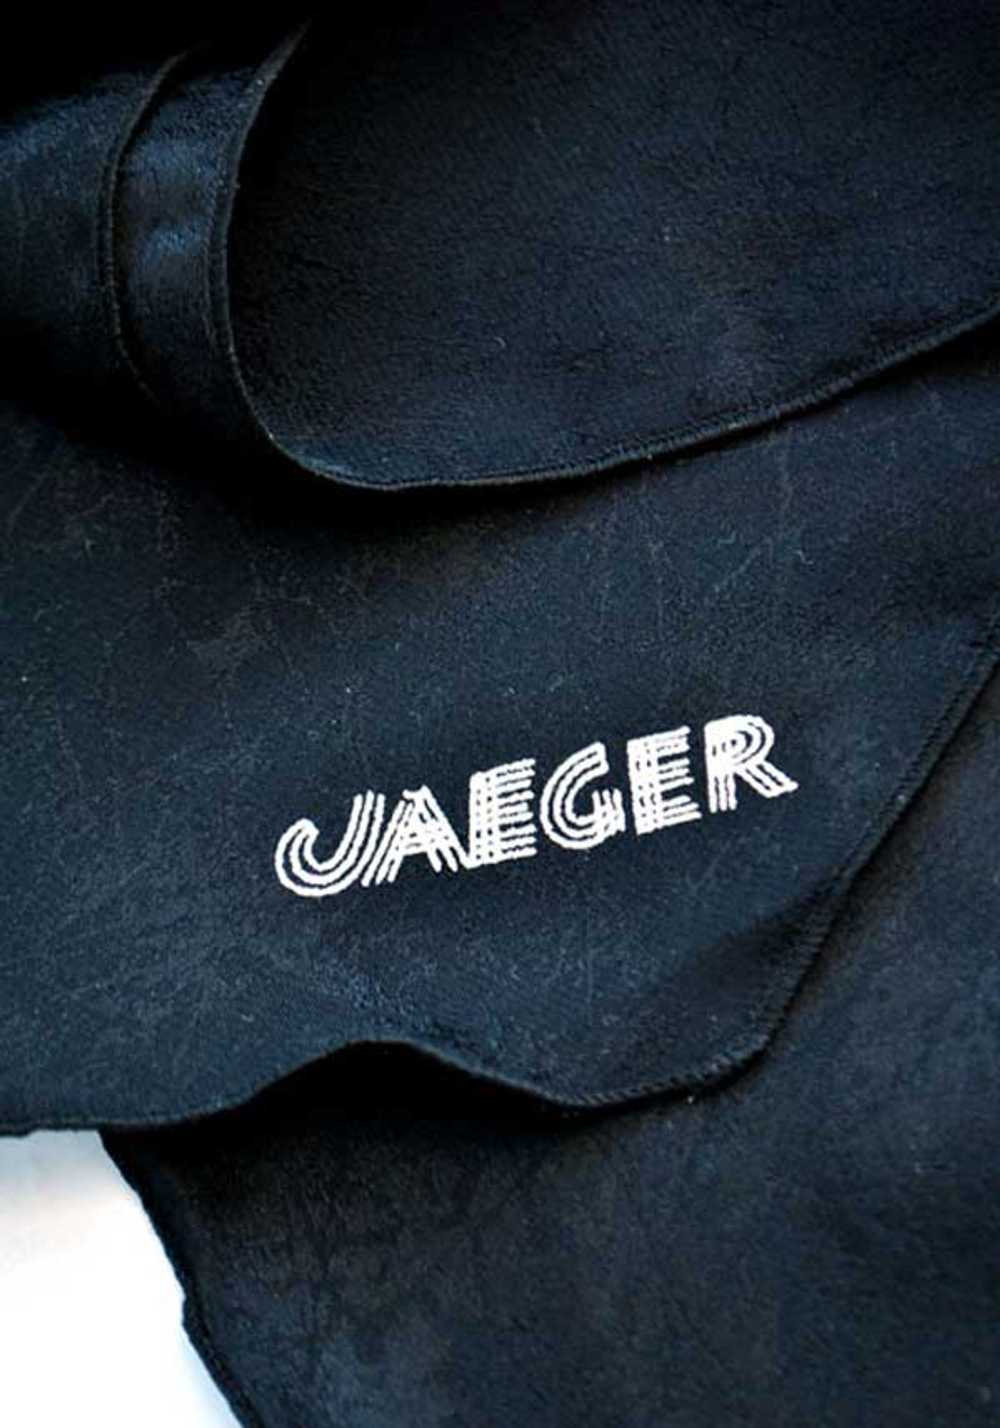 Women's Vintage 70s Jaeger Black Silk Scarf - image 3